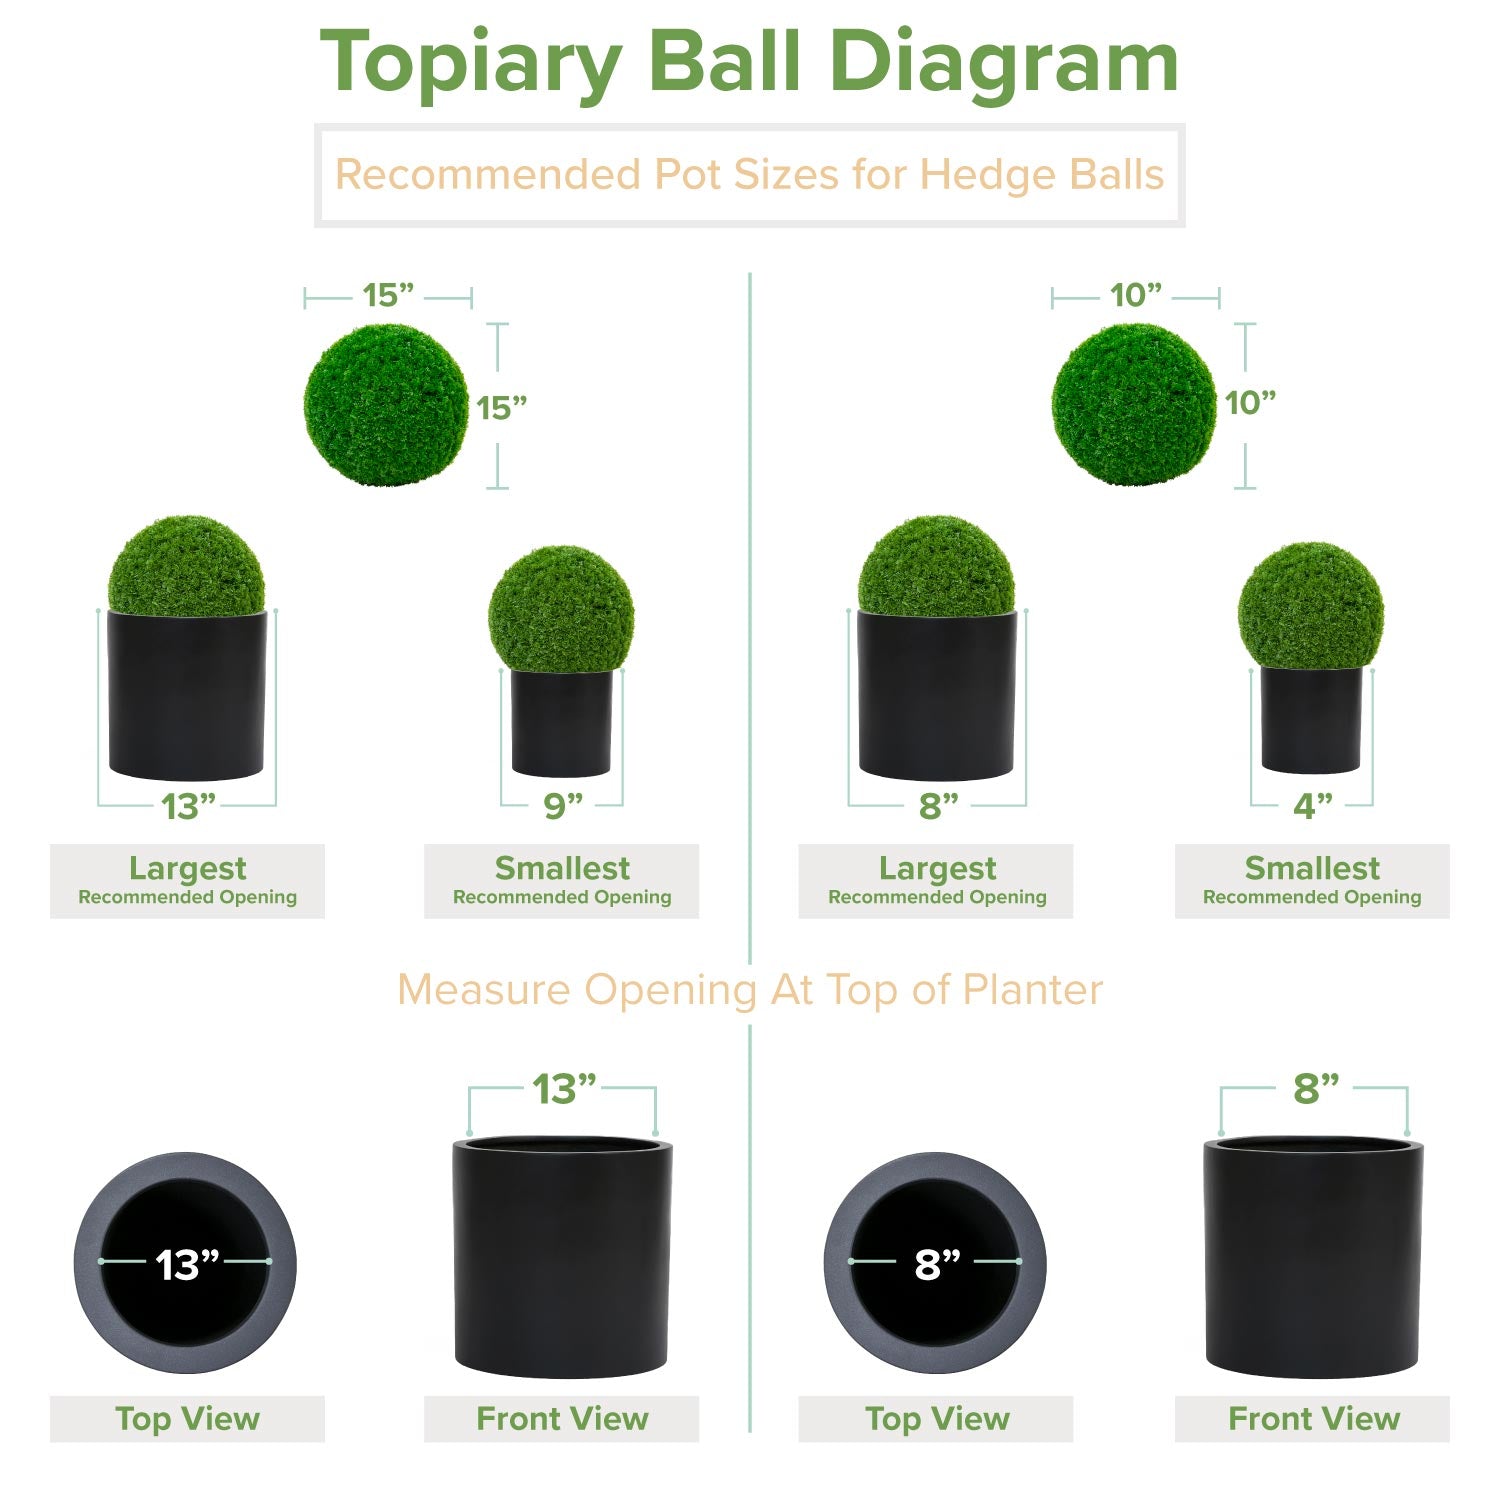 Artificial Juniper Cypress Topiary Ball